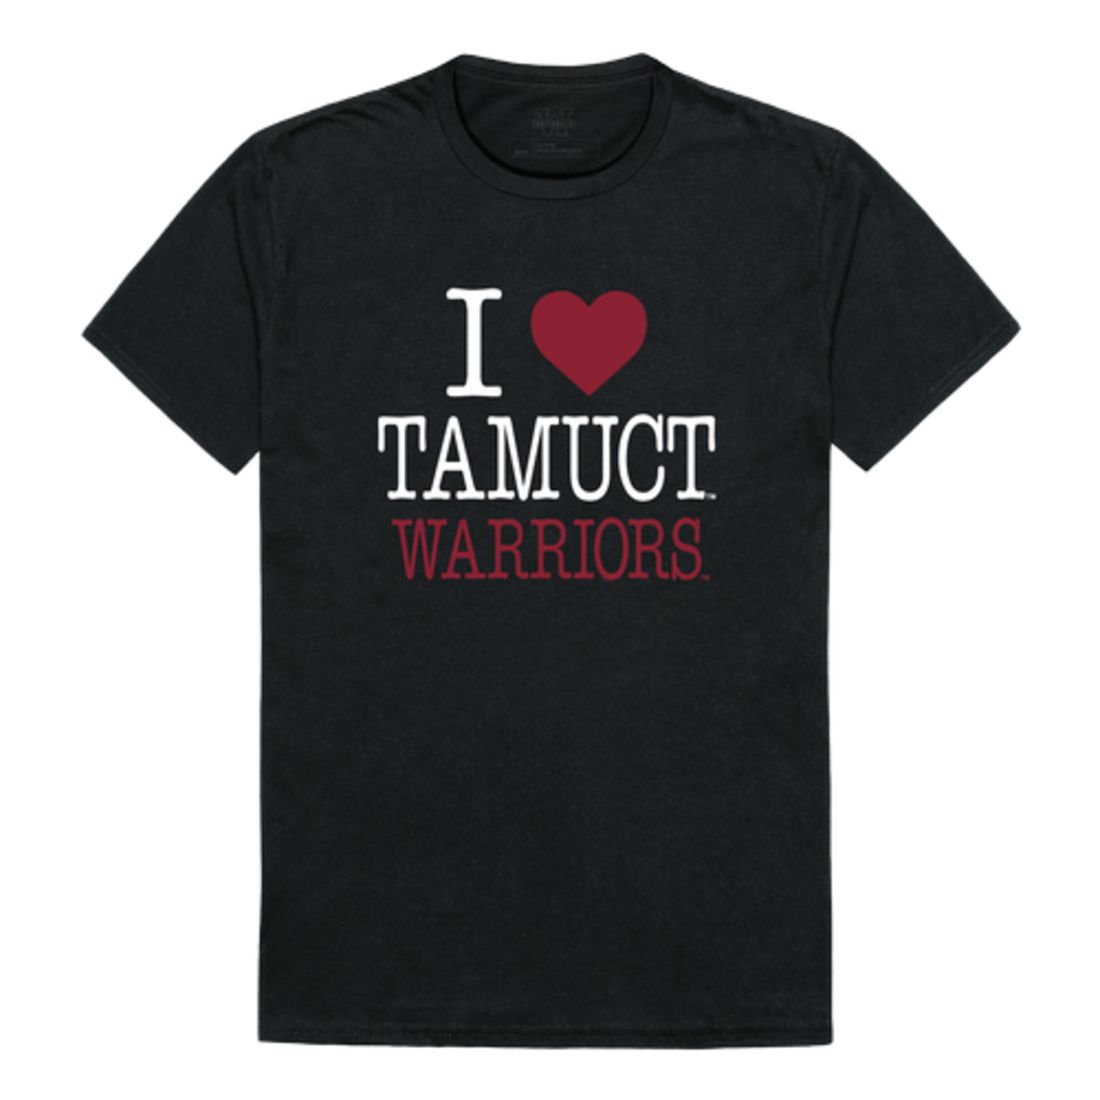 I Love Texas A&M University-Central Texas Warriors T-Shirt Tee